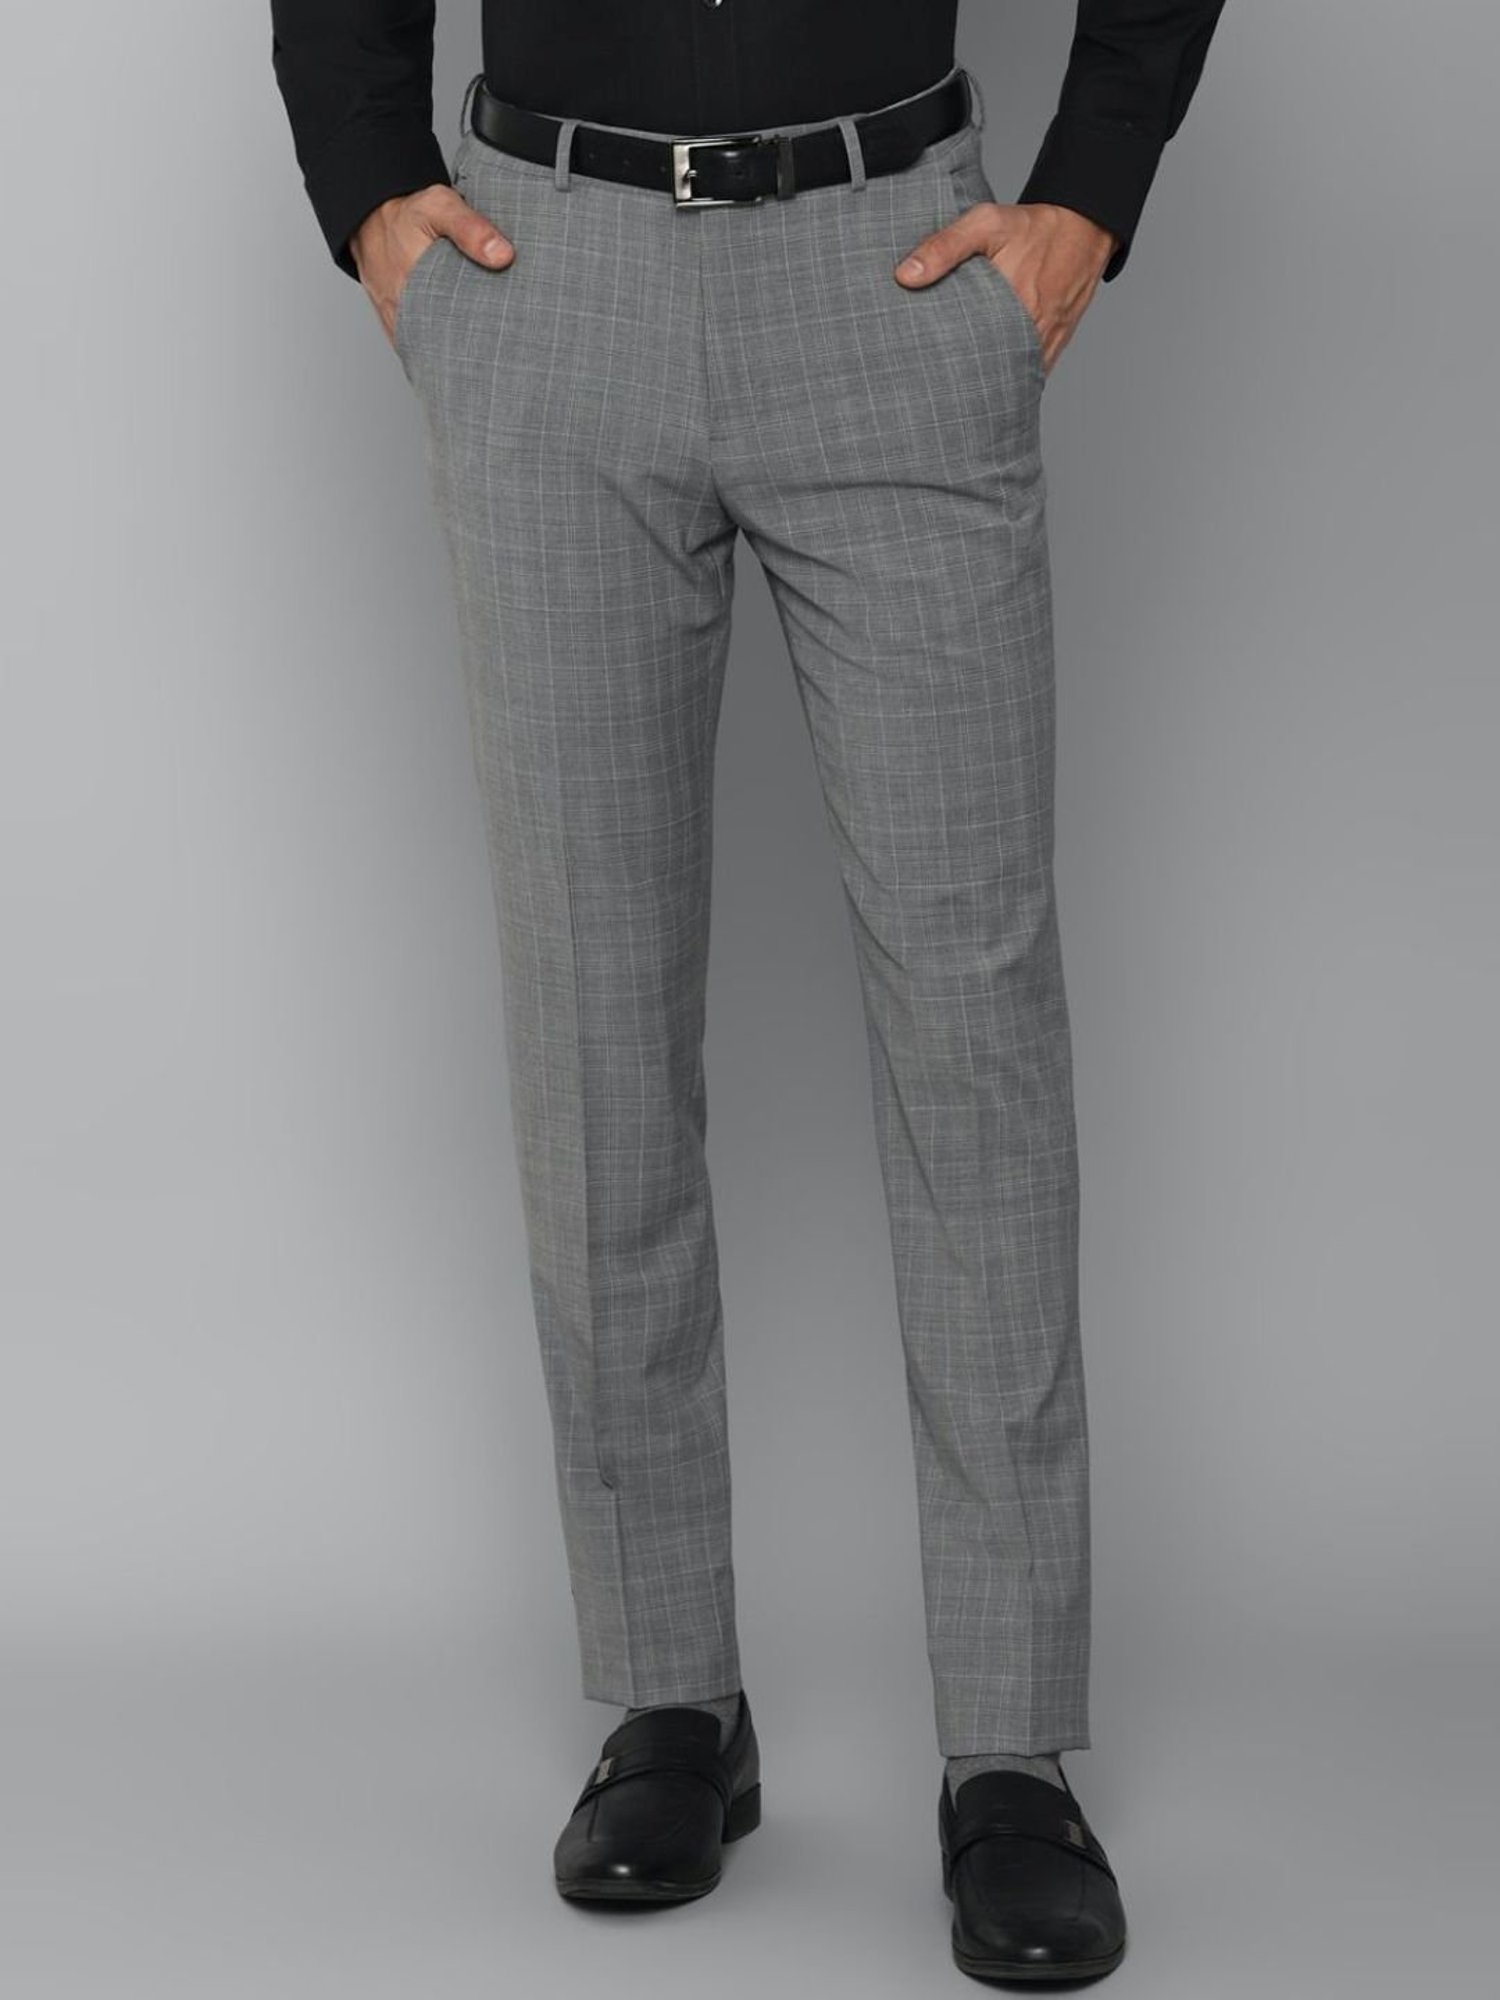 Buy Allen Solly Grey Cotton Linen Slim Fit Trousers for Mens Online  Tata  CLiQ